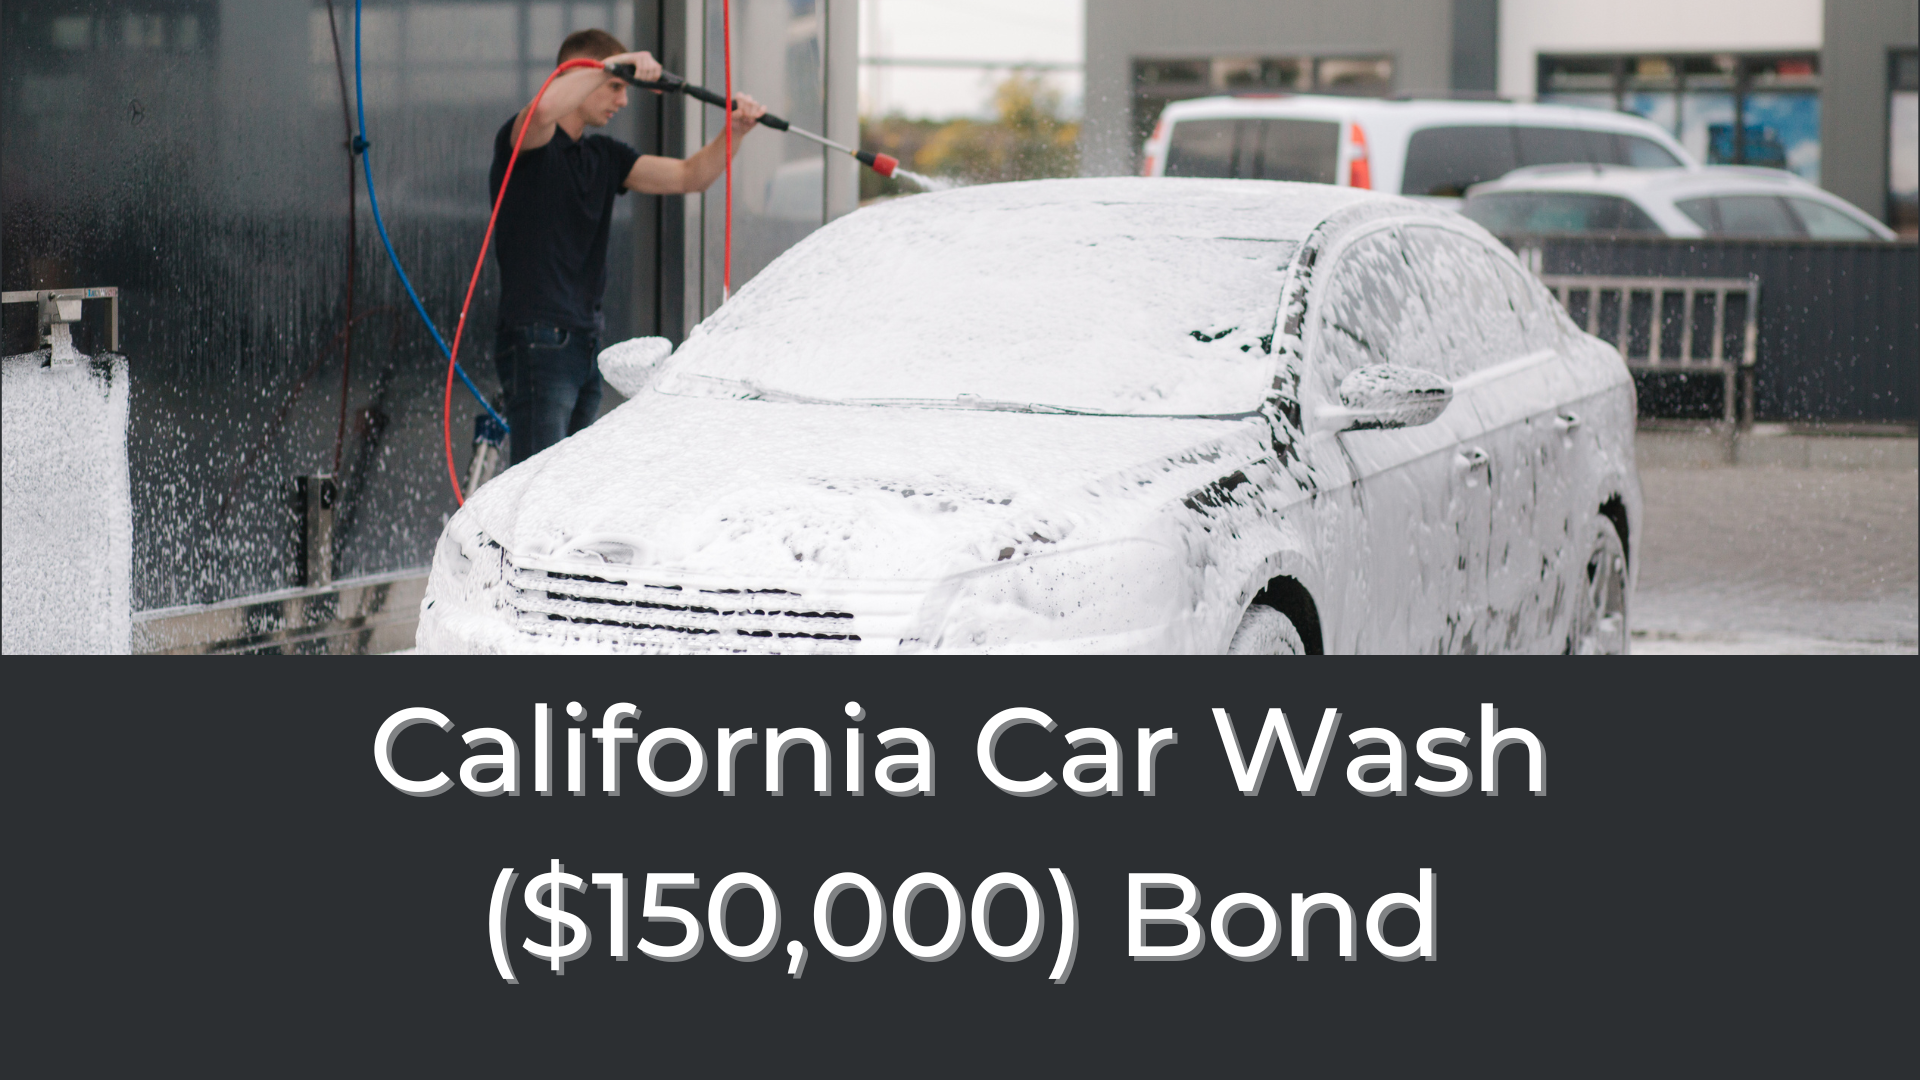 Surety Bond-California Car Wash ($150,000) Bond